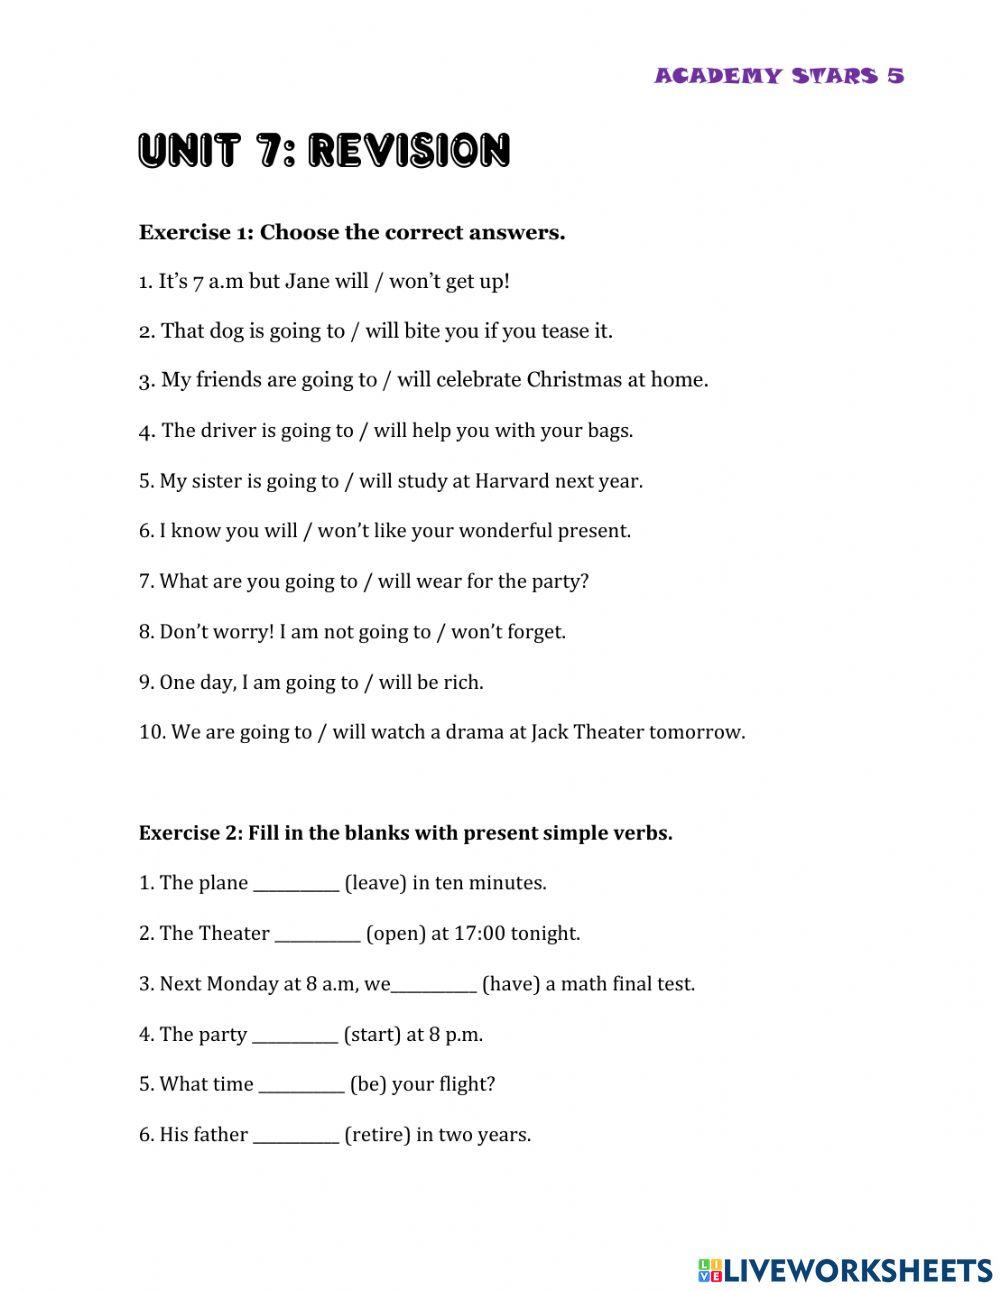 Unit 7: revision - academy stars 5